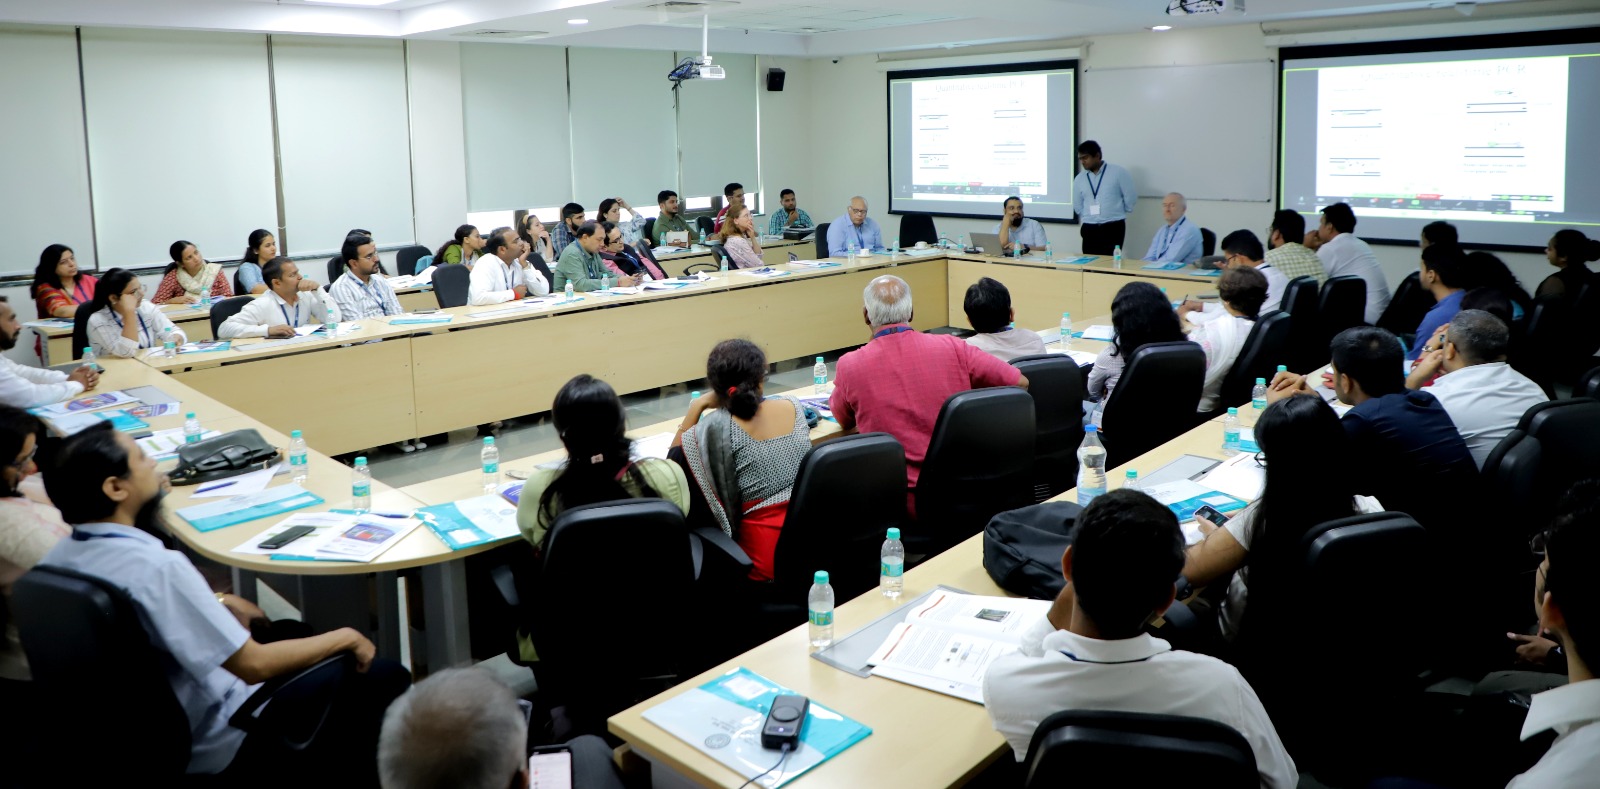 Pavitra Ganga Technology workshop in New Delhi